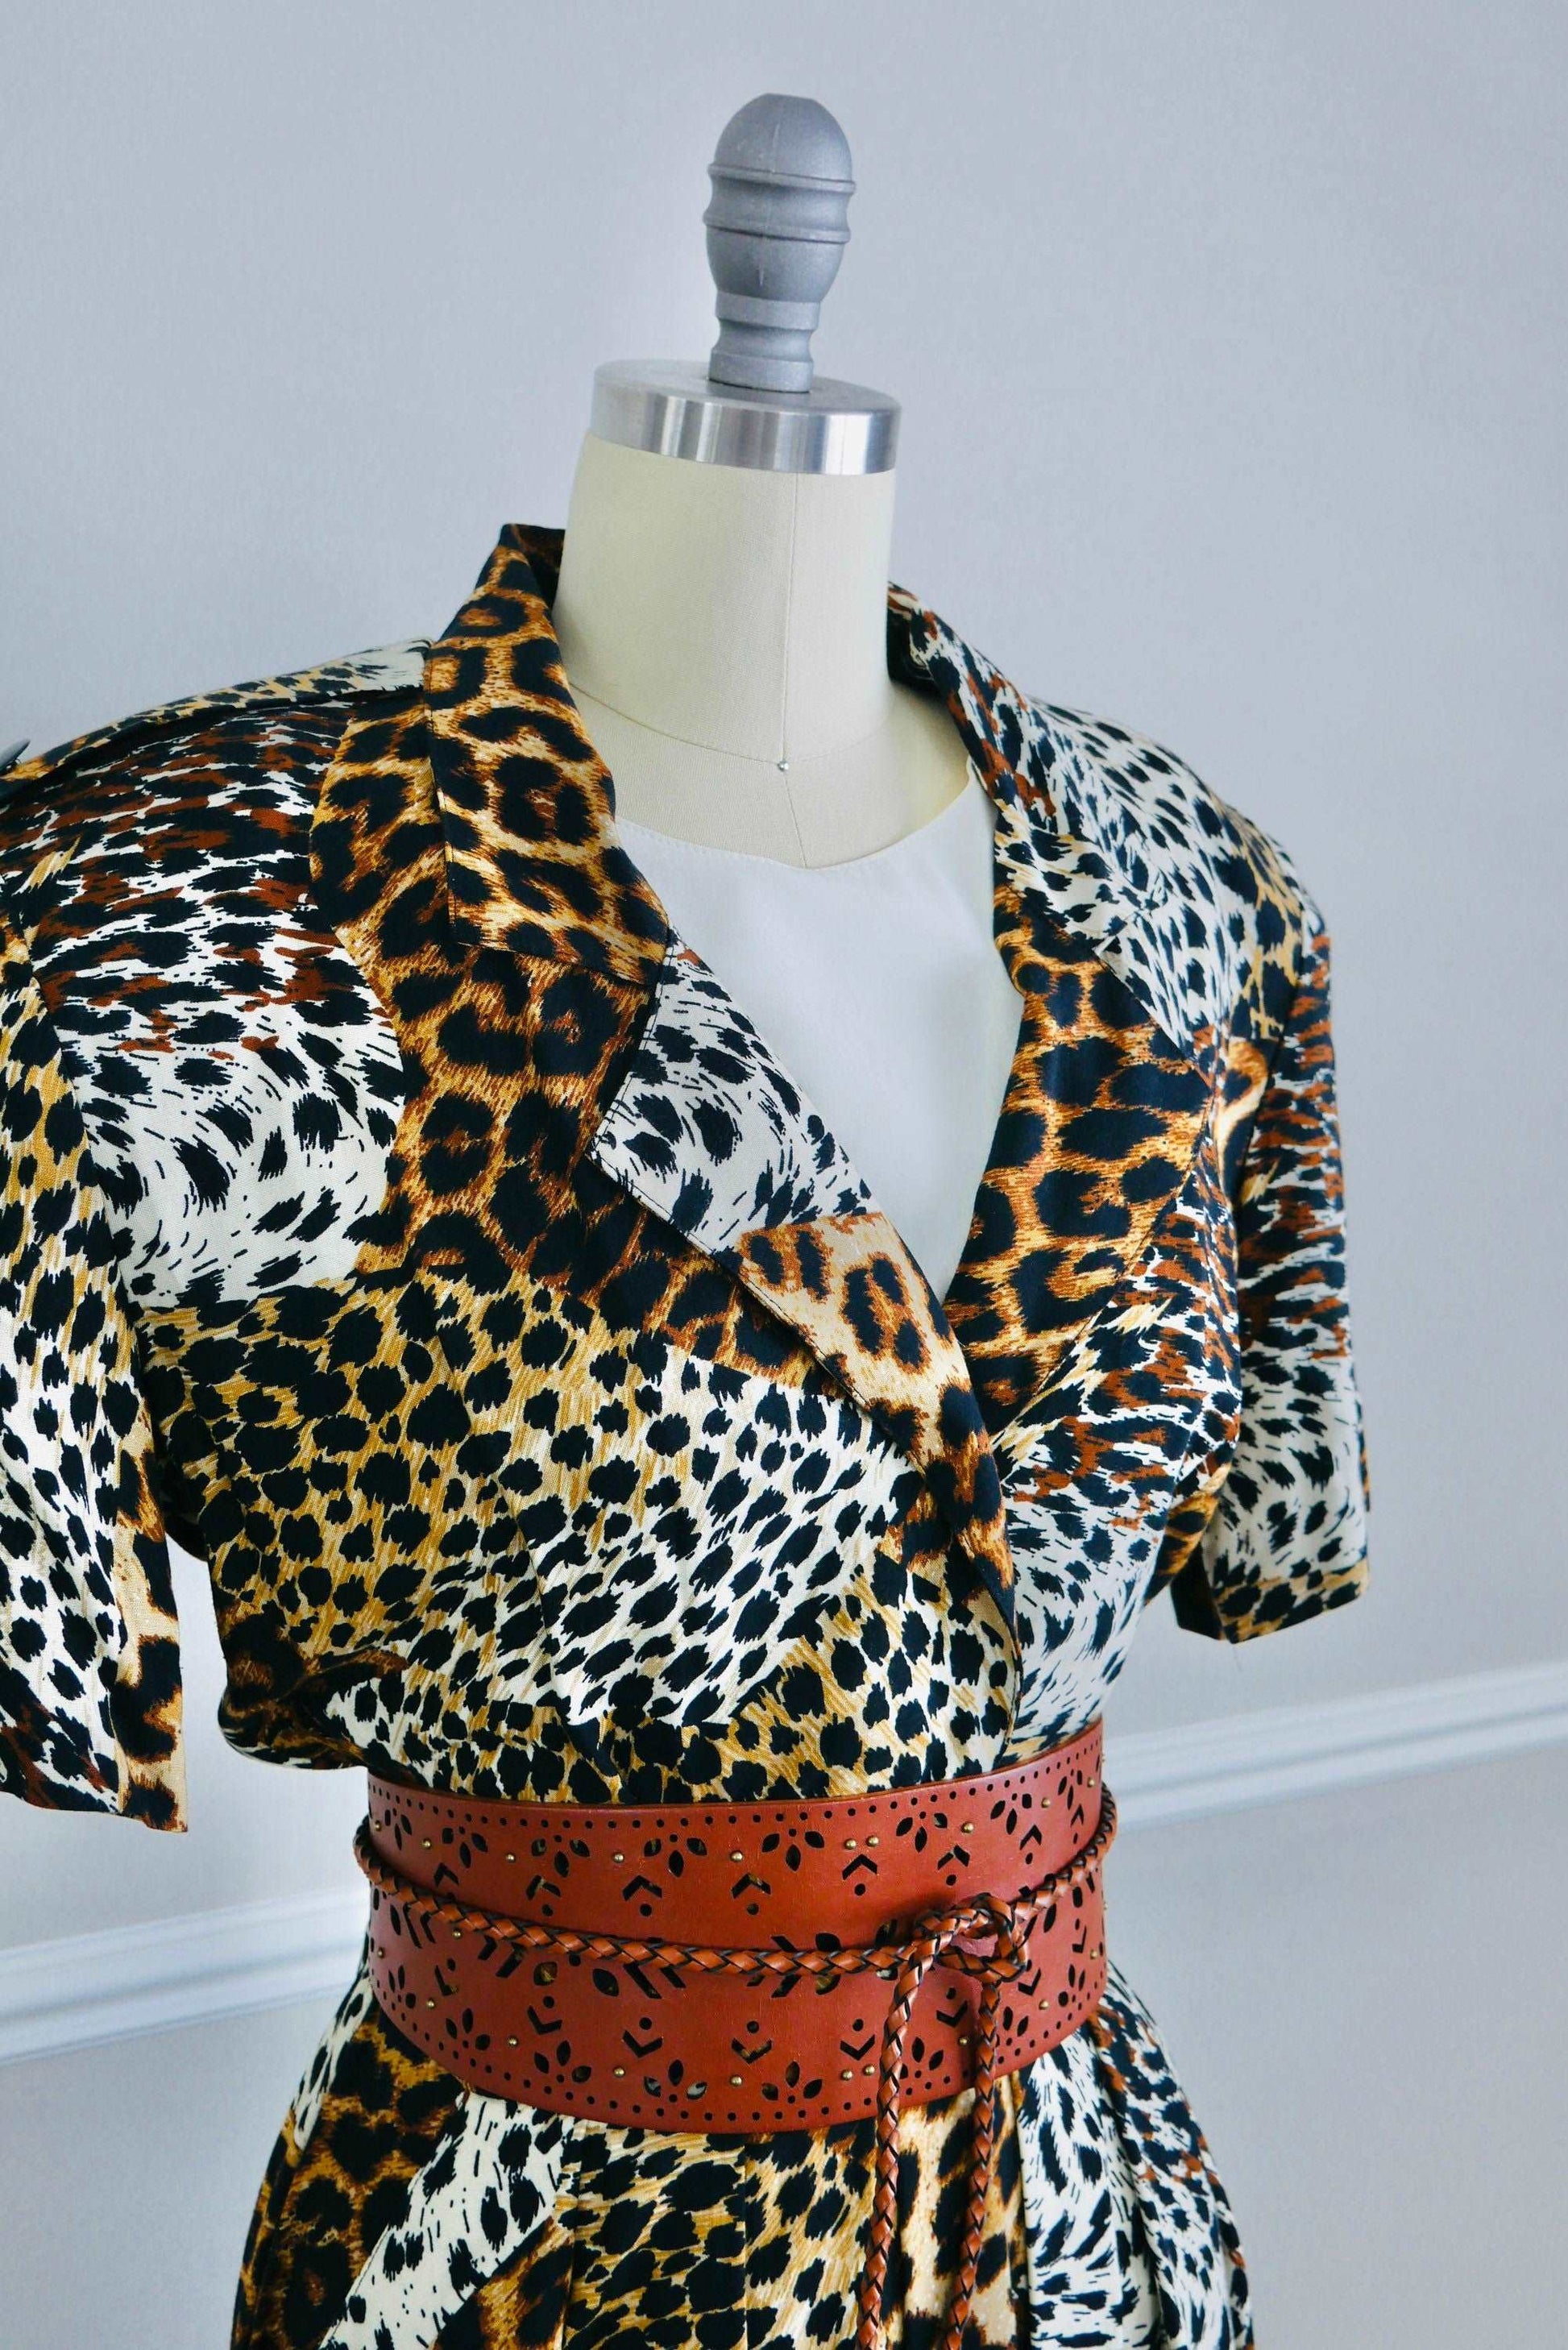 ON SALE Vintage 1980s Leopard Print Dress / 80s retro rayon animal print dress size M